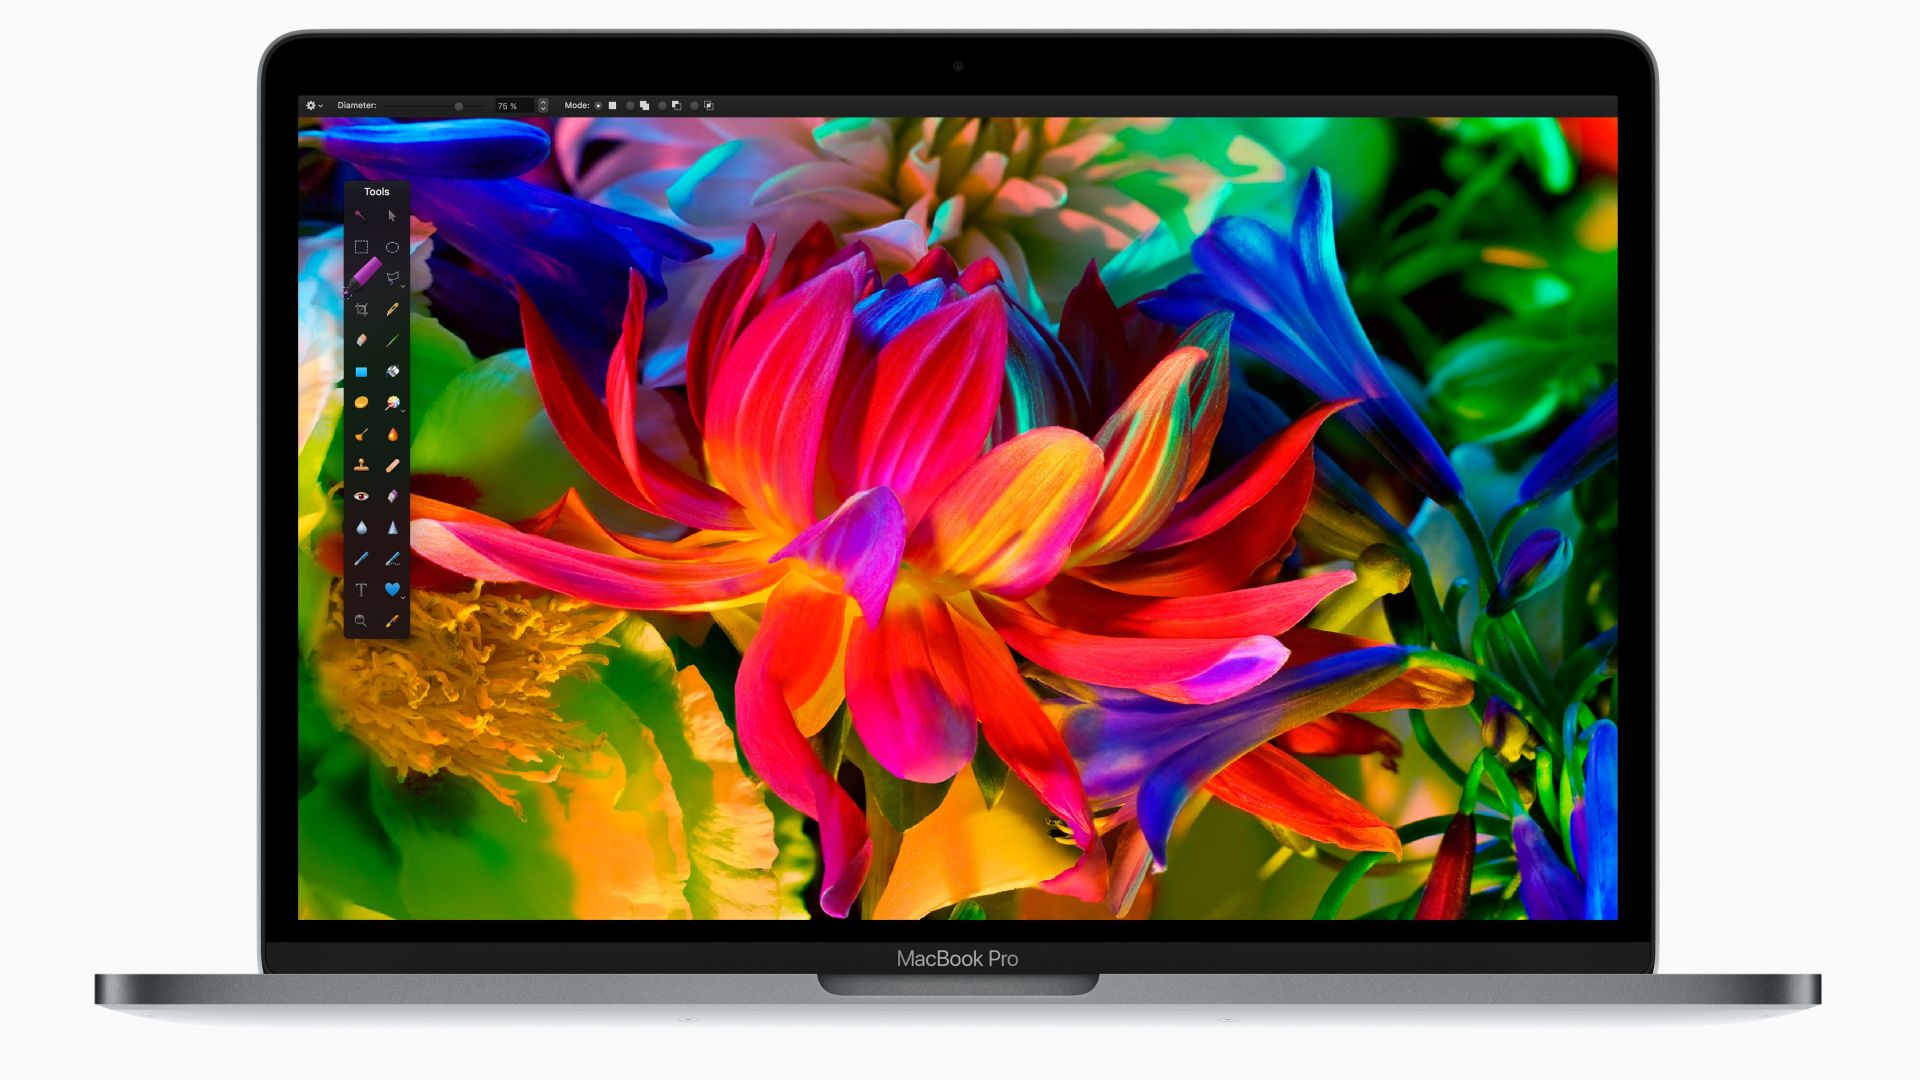 MacBook Pro, Макбук Про, обзор, лэптоп, MacBook Pro, review, apple, laptop (horizontal)